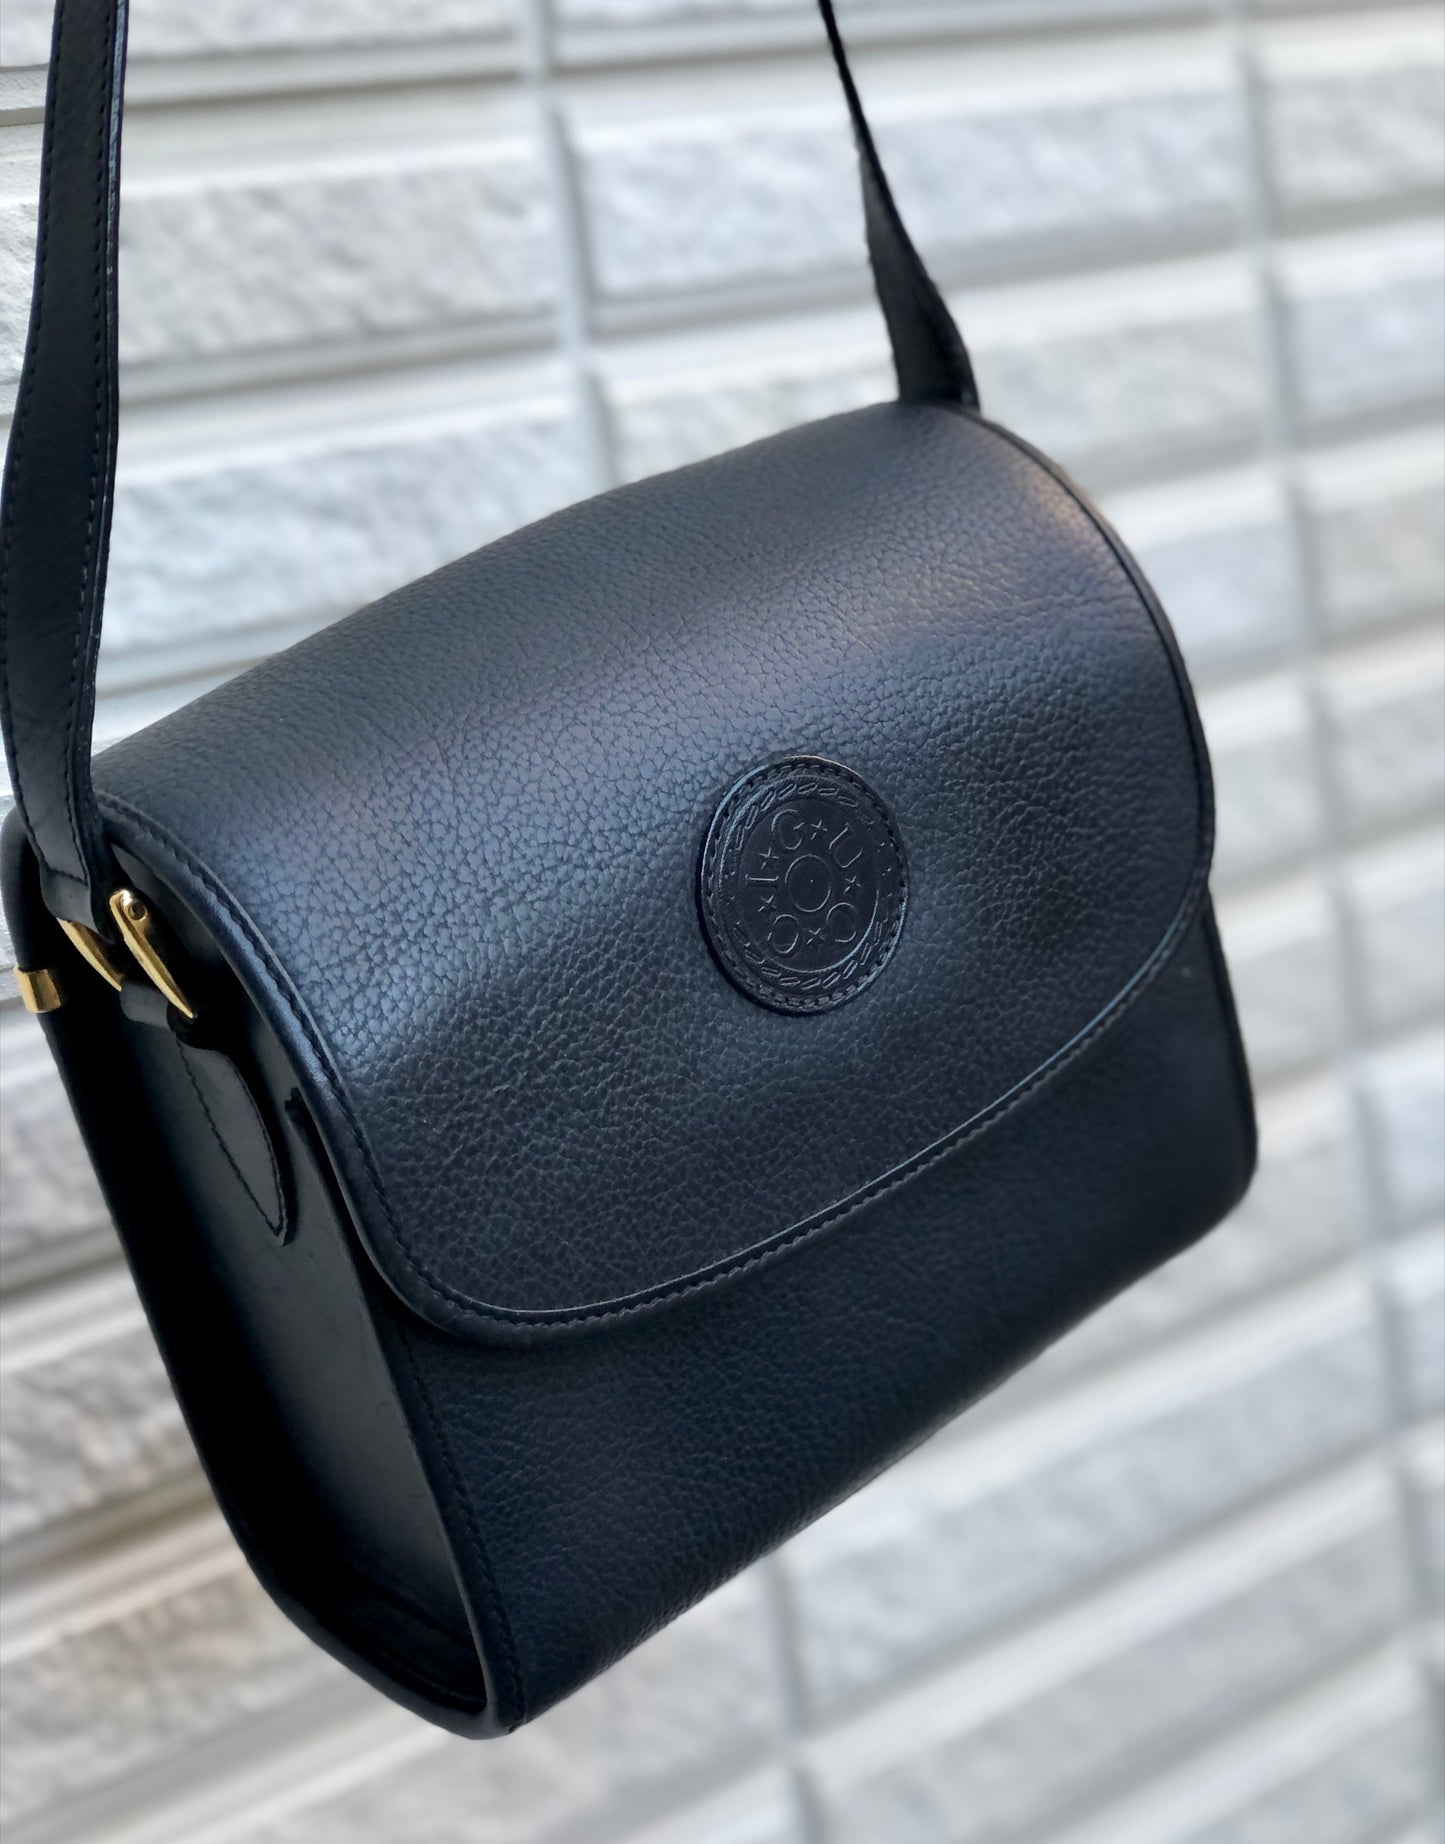 Gucci Vintage Leather Clutch Bag - Black